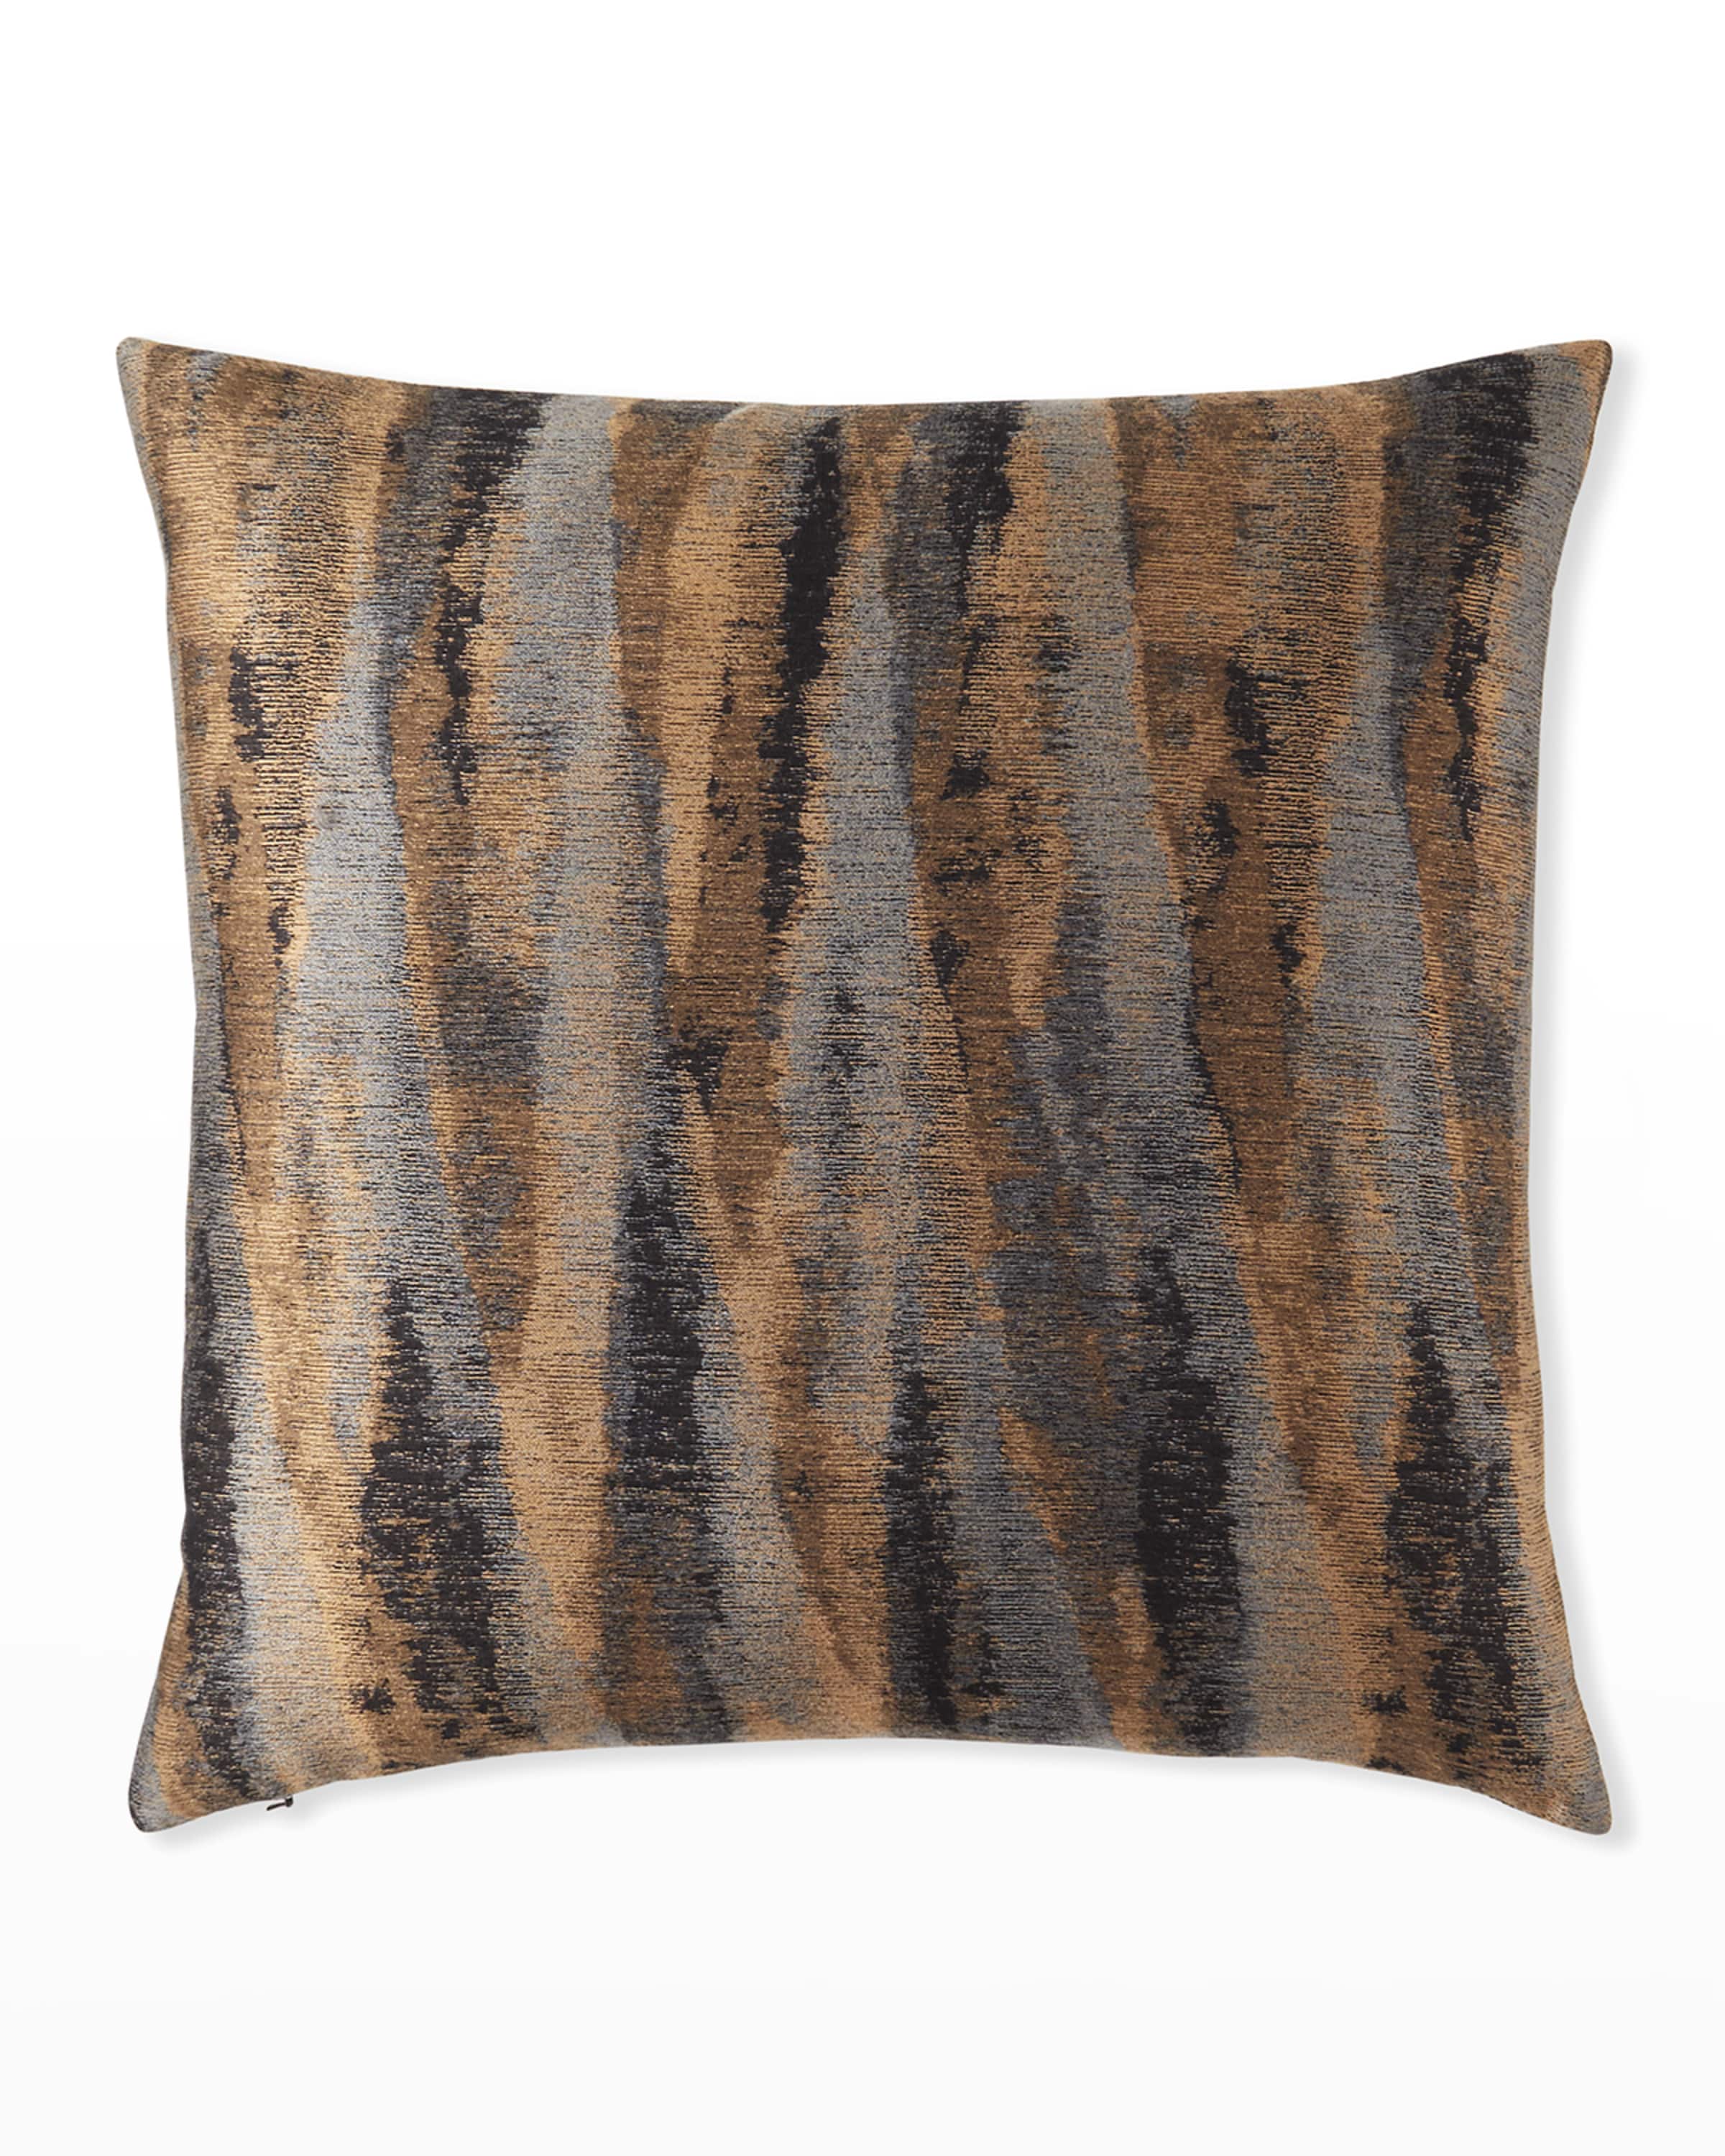 Uma Velvet Decorative Pillow in Teal, Charcoal, Gold & Gray